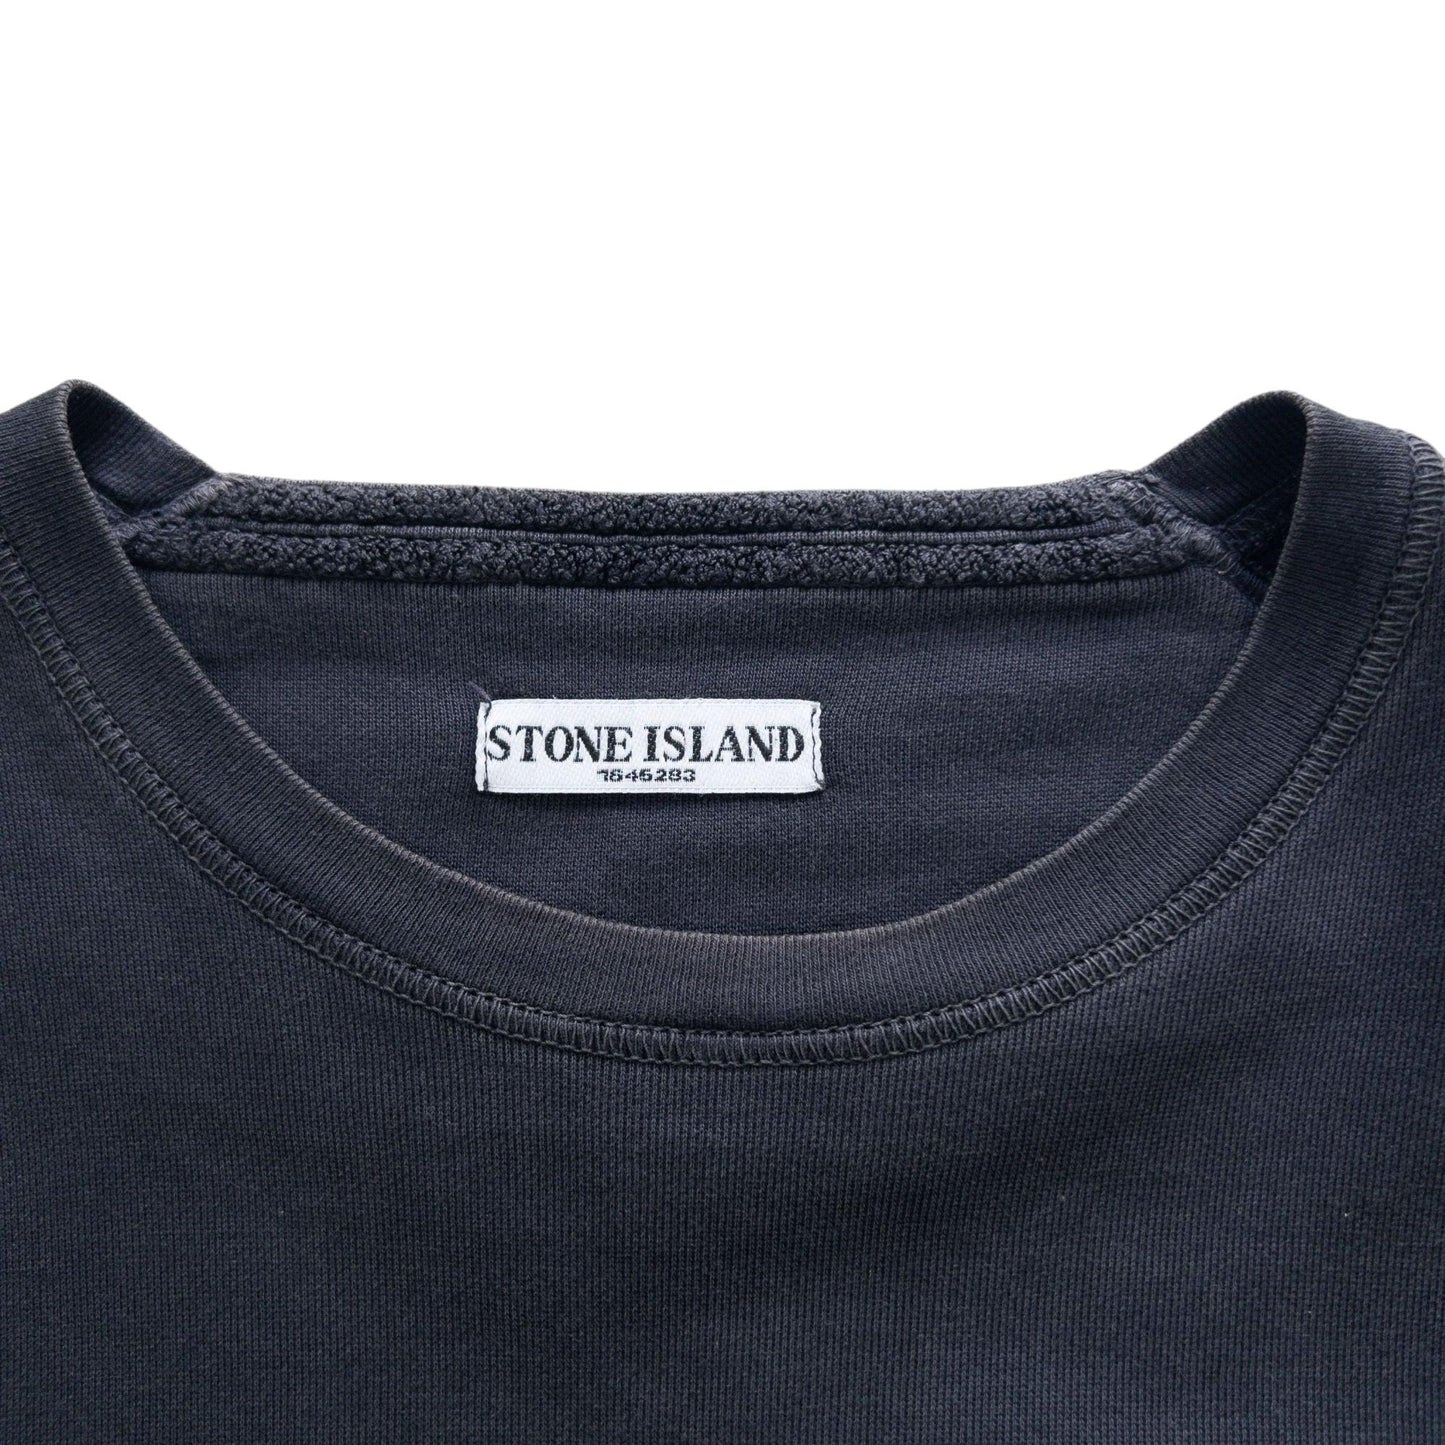 Vintage Stone Island Sweatshirt Size L